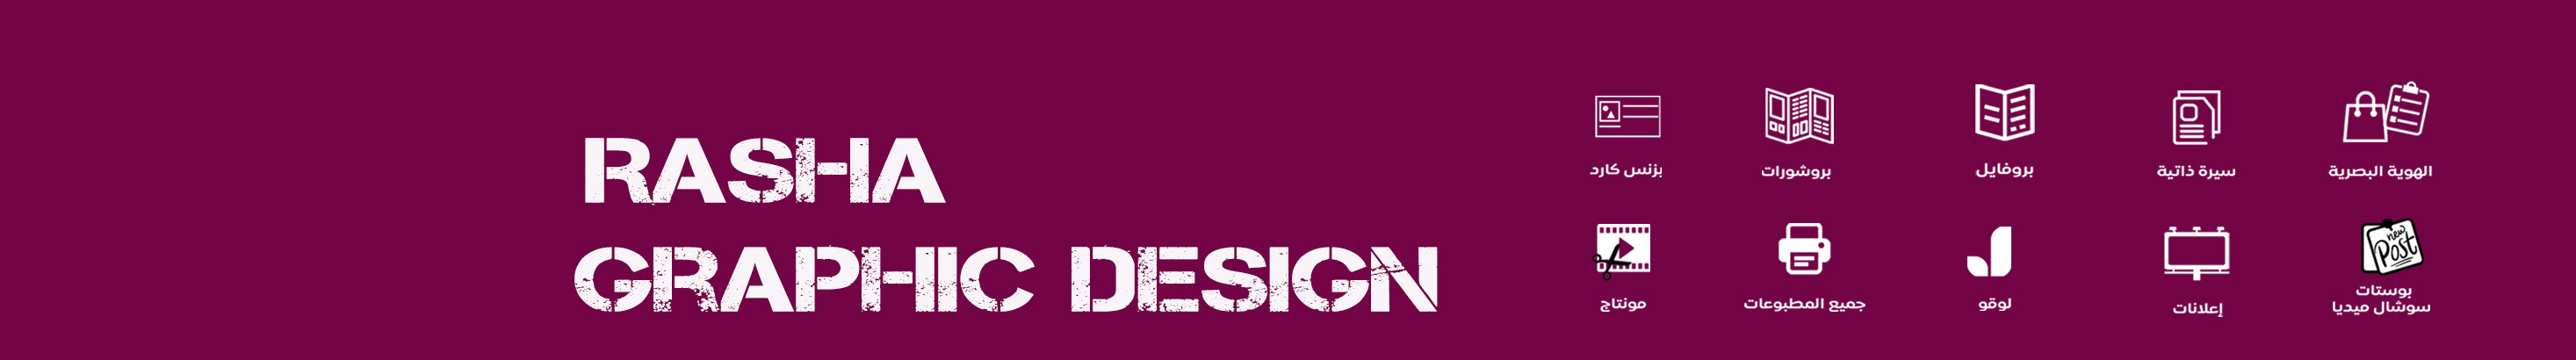 Banner de perfil de Rasha | Graphic designer